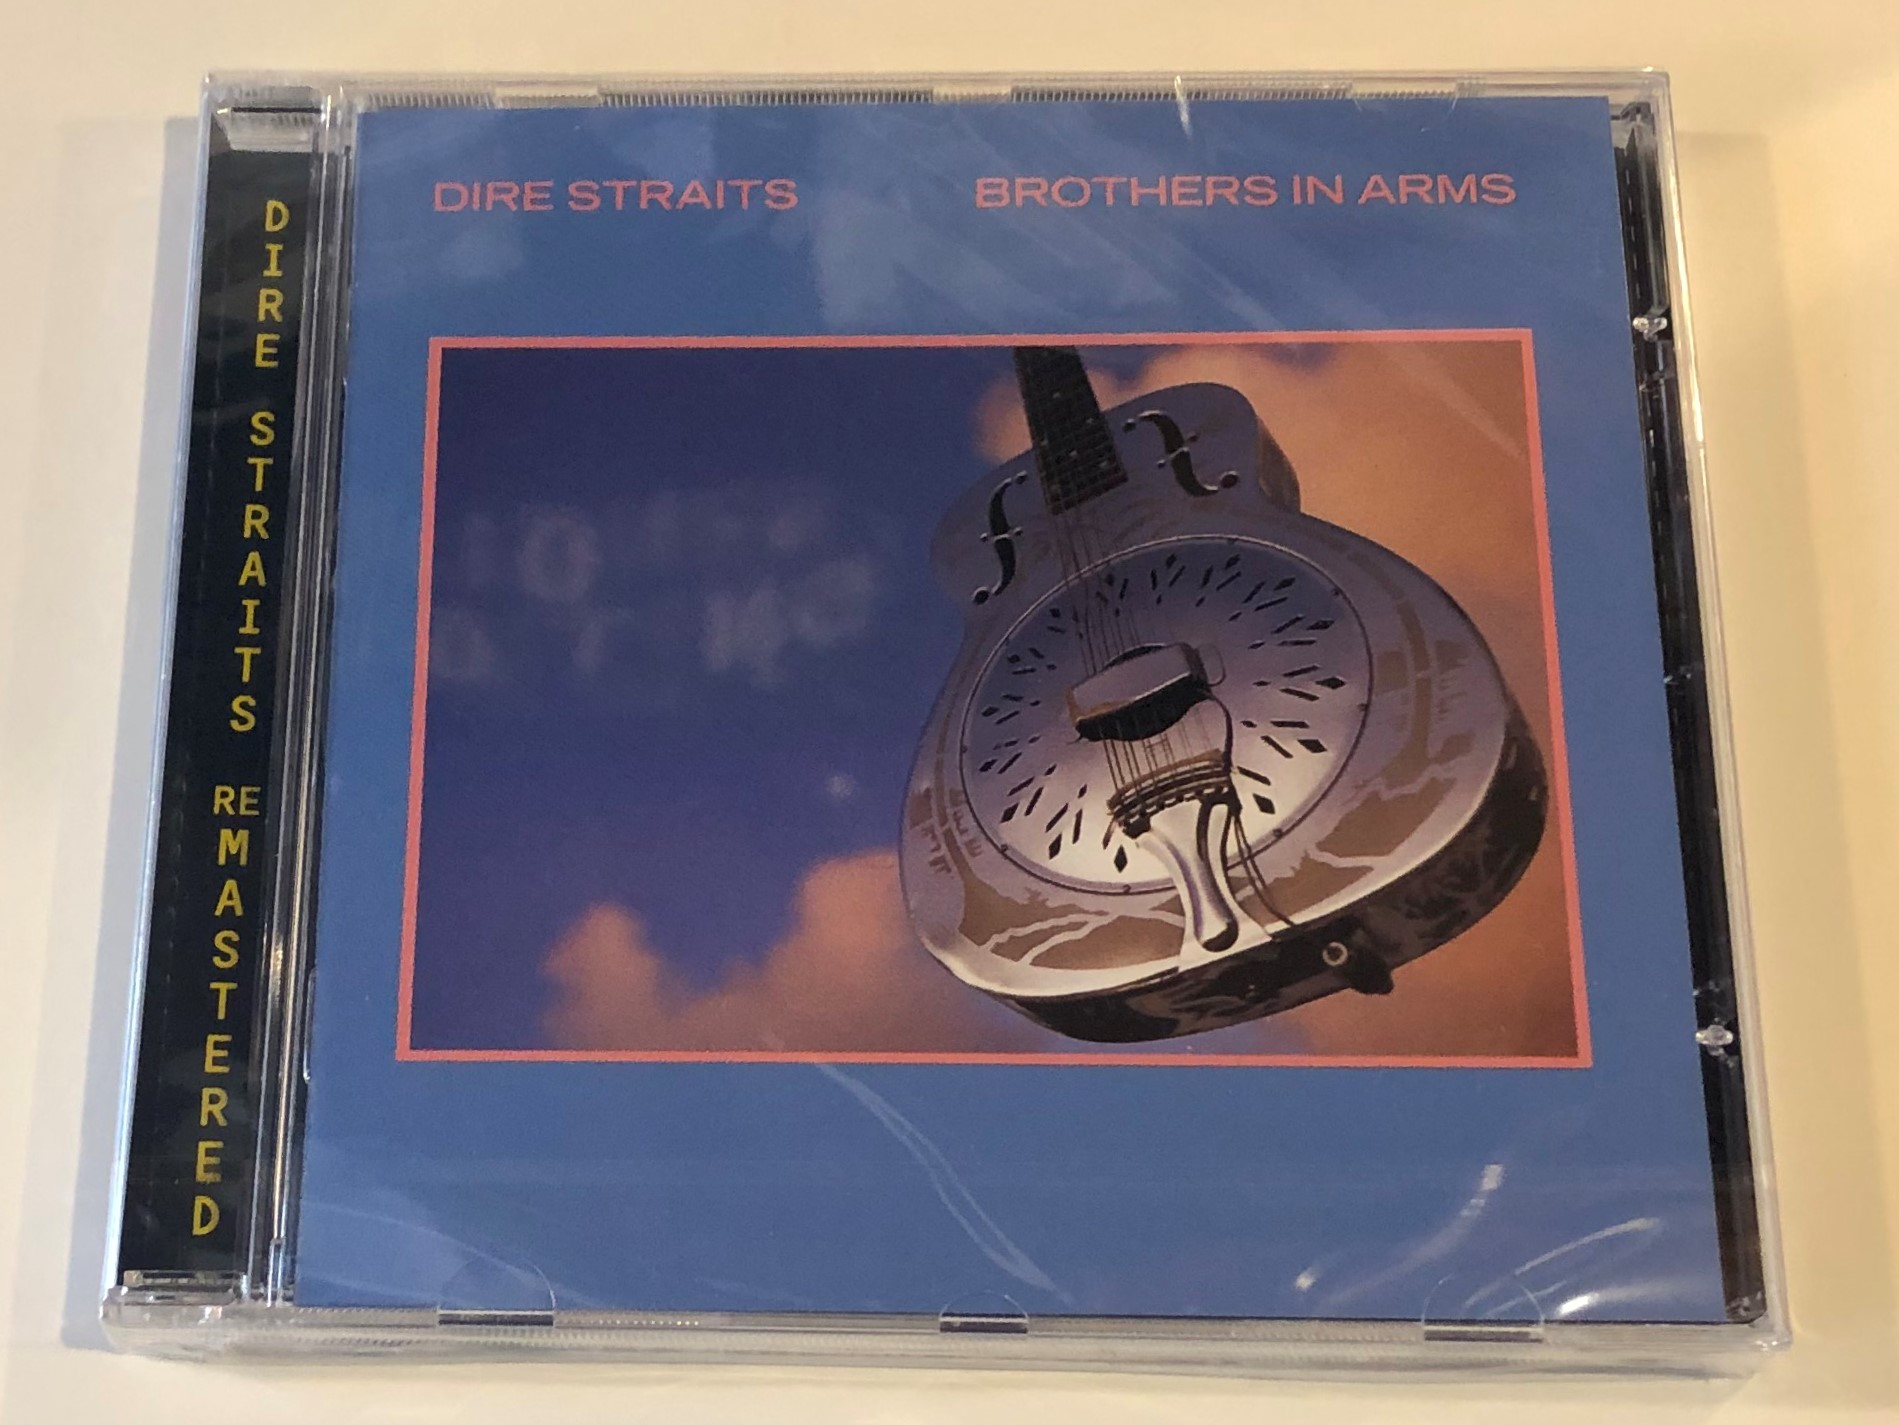 dire-straits-brothers-in-arms-dire-straits-remastered-vertigo-audio-cd-1996-824-499-2-1-.jpg